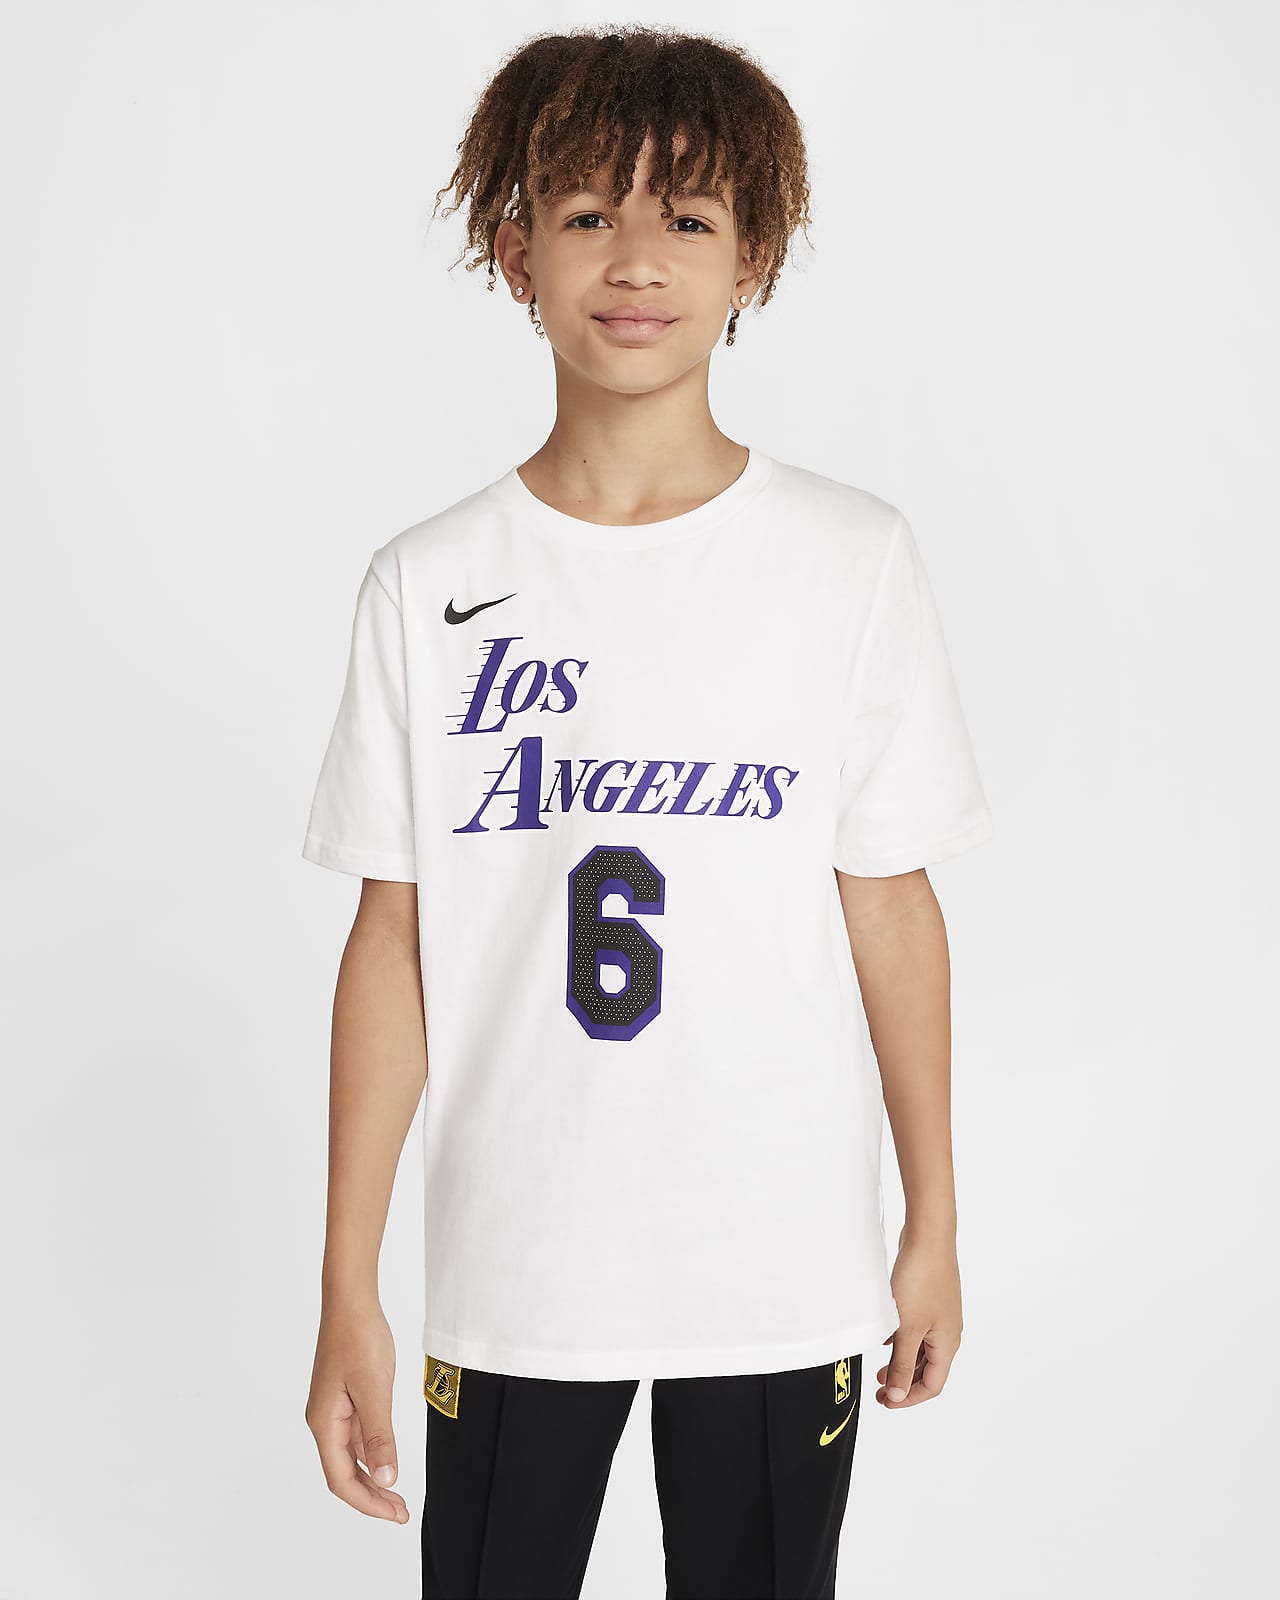 Los Angeles Lakers City Edition Camiseta Nike NBA - Niño/a